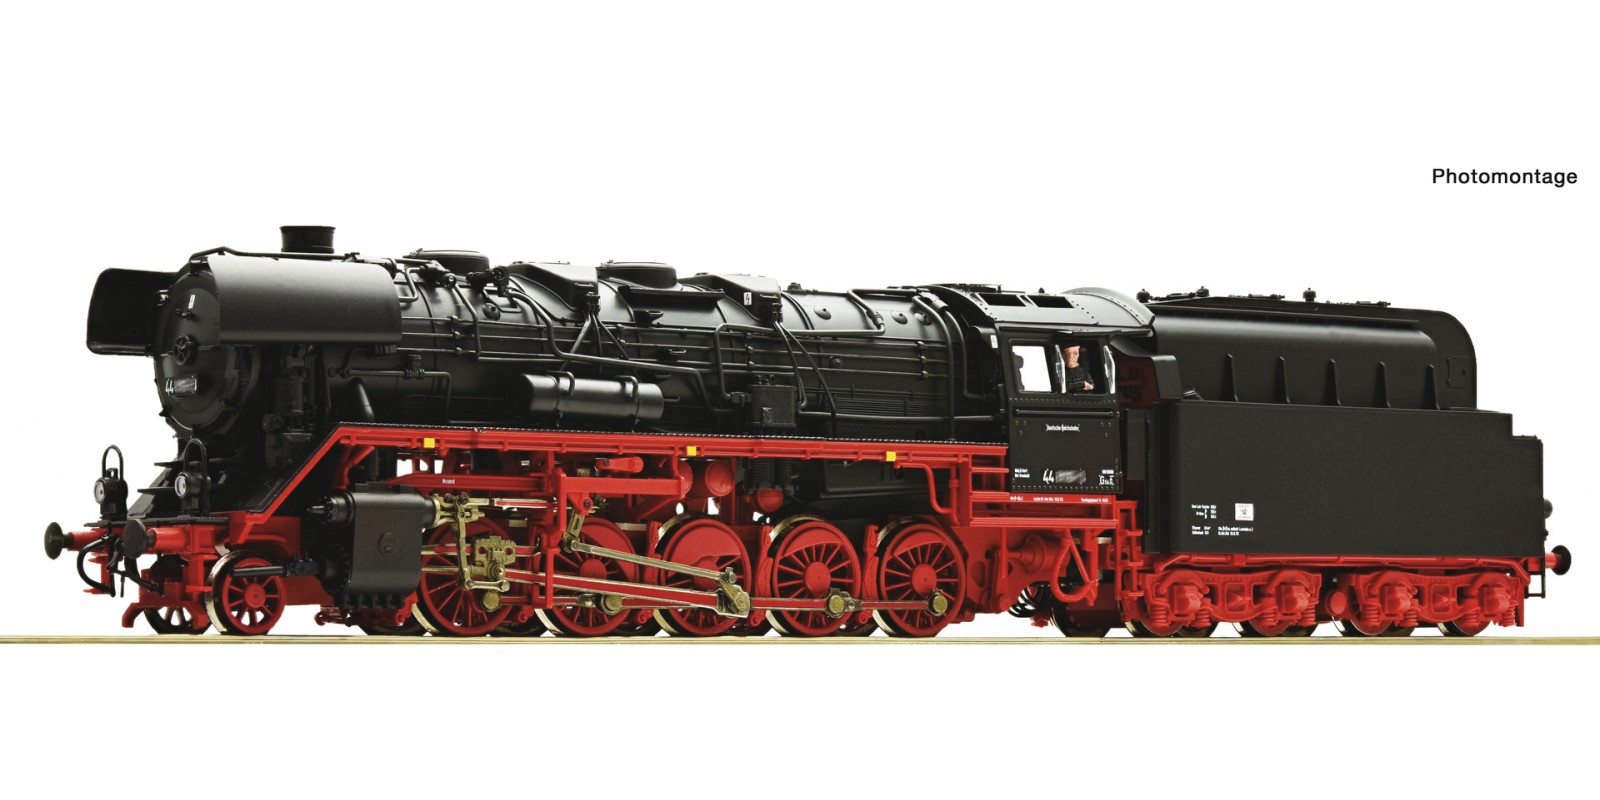 RO70283 Steam locomotive class 44, DR